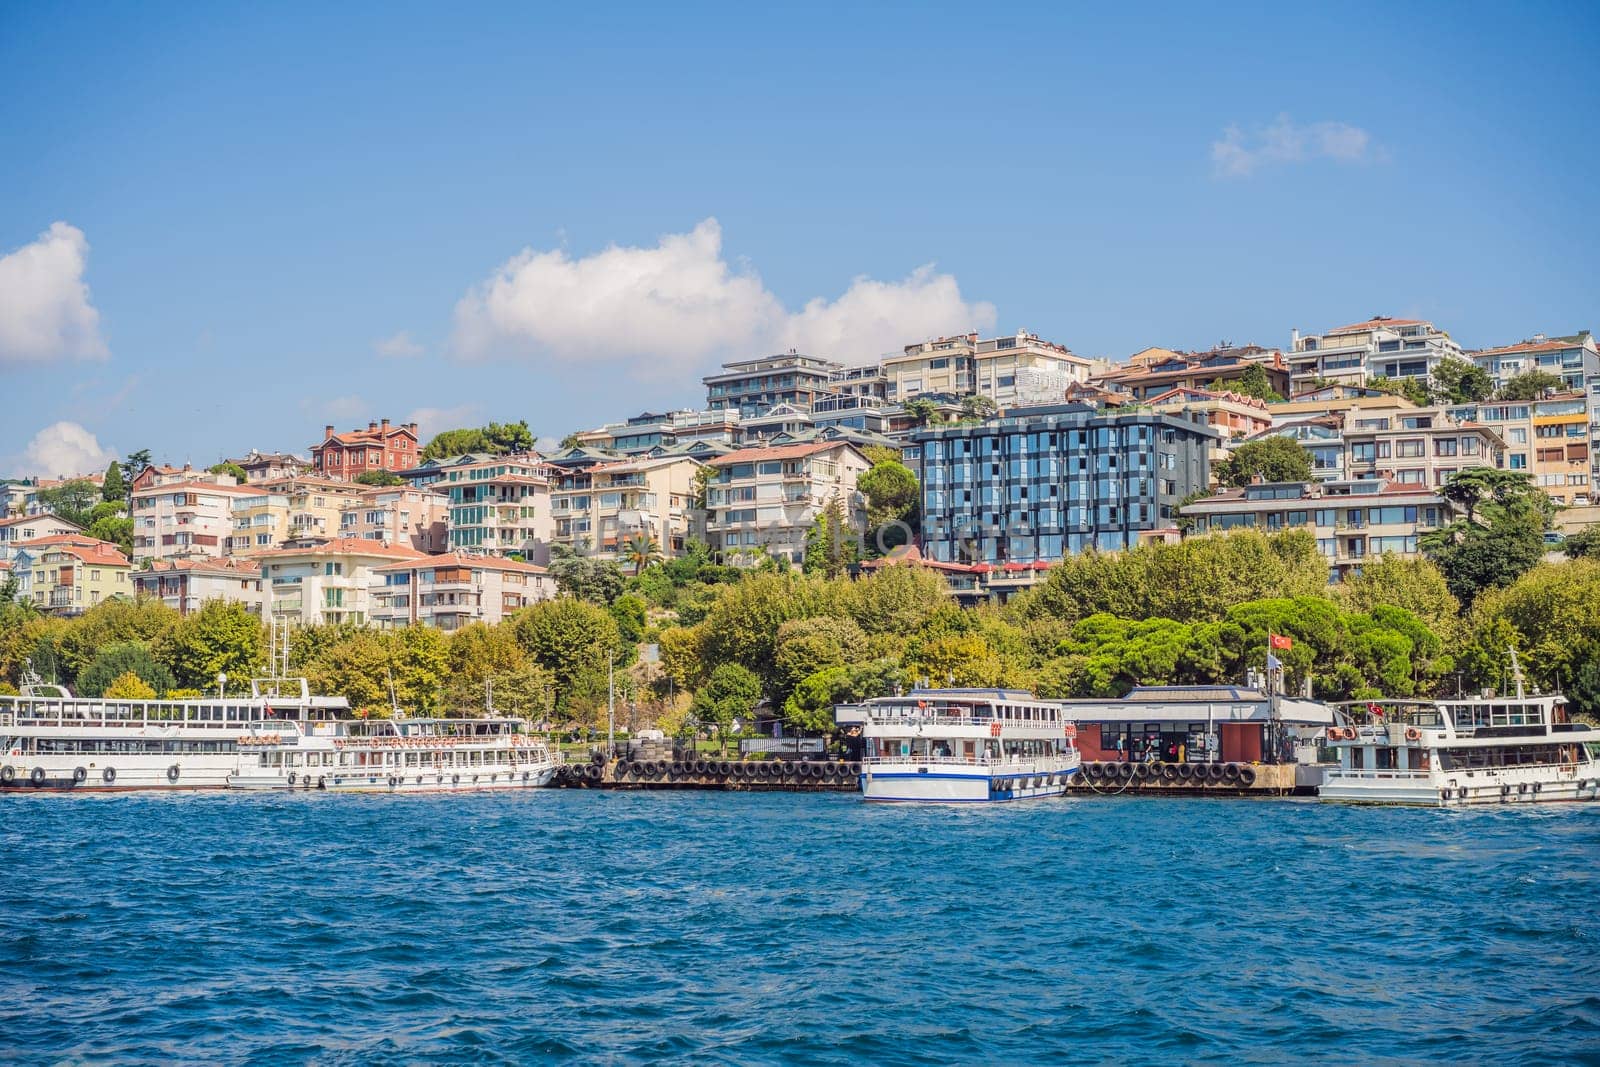 Muslim architecture and water transport in Turkey - Beautiful View touristic landmarks from sea voyage on Bosphorus by galitskaya